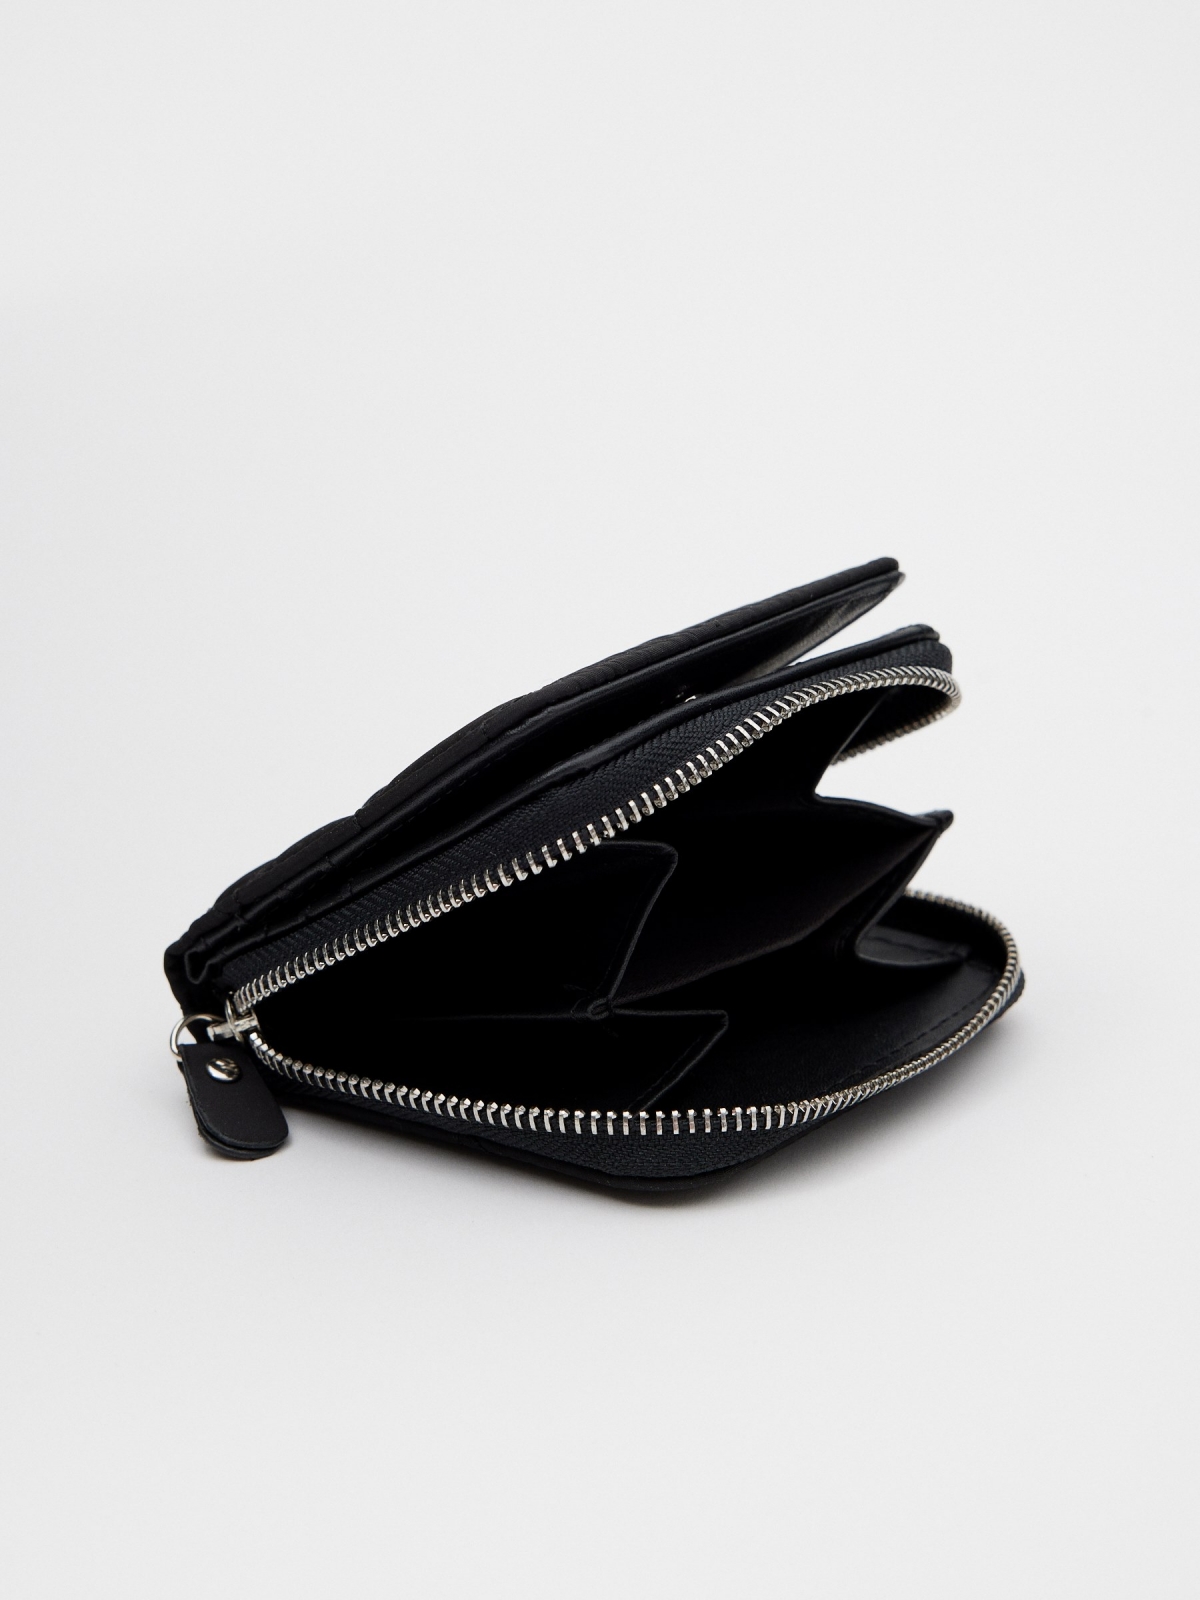 Nylon wallet for women black detail view